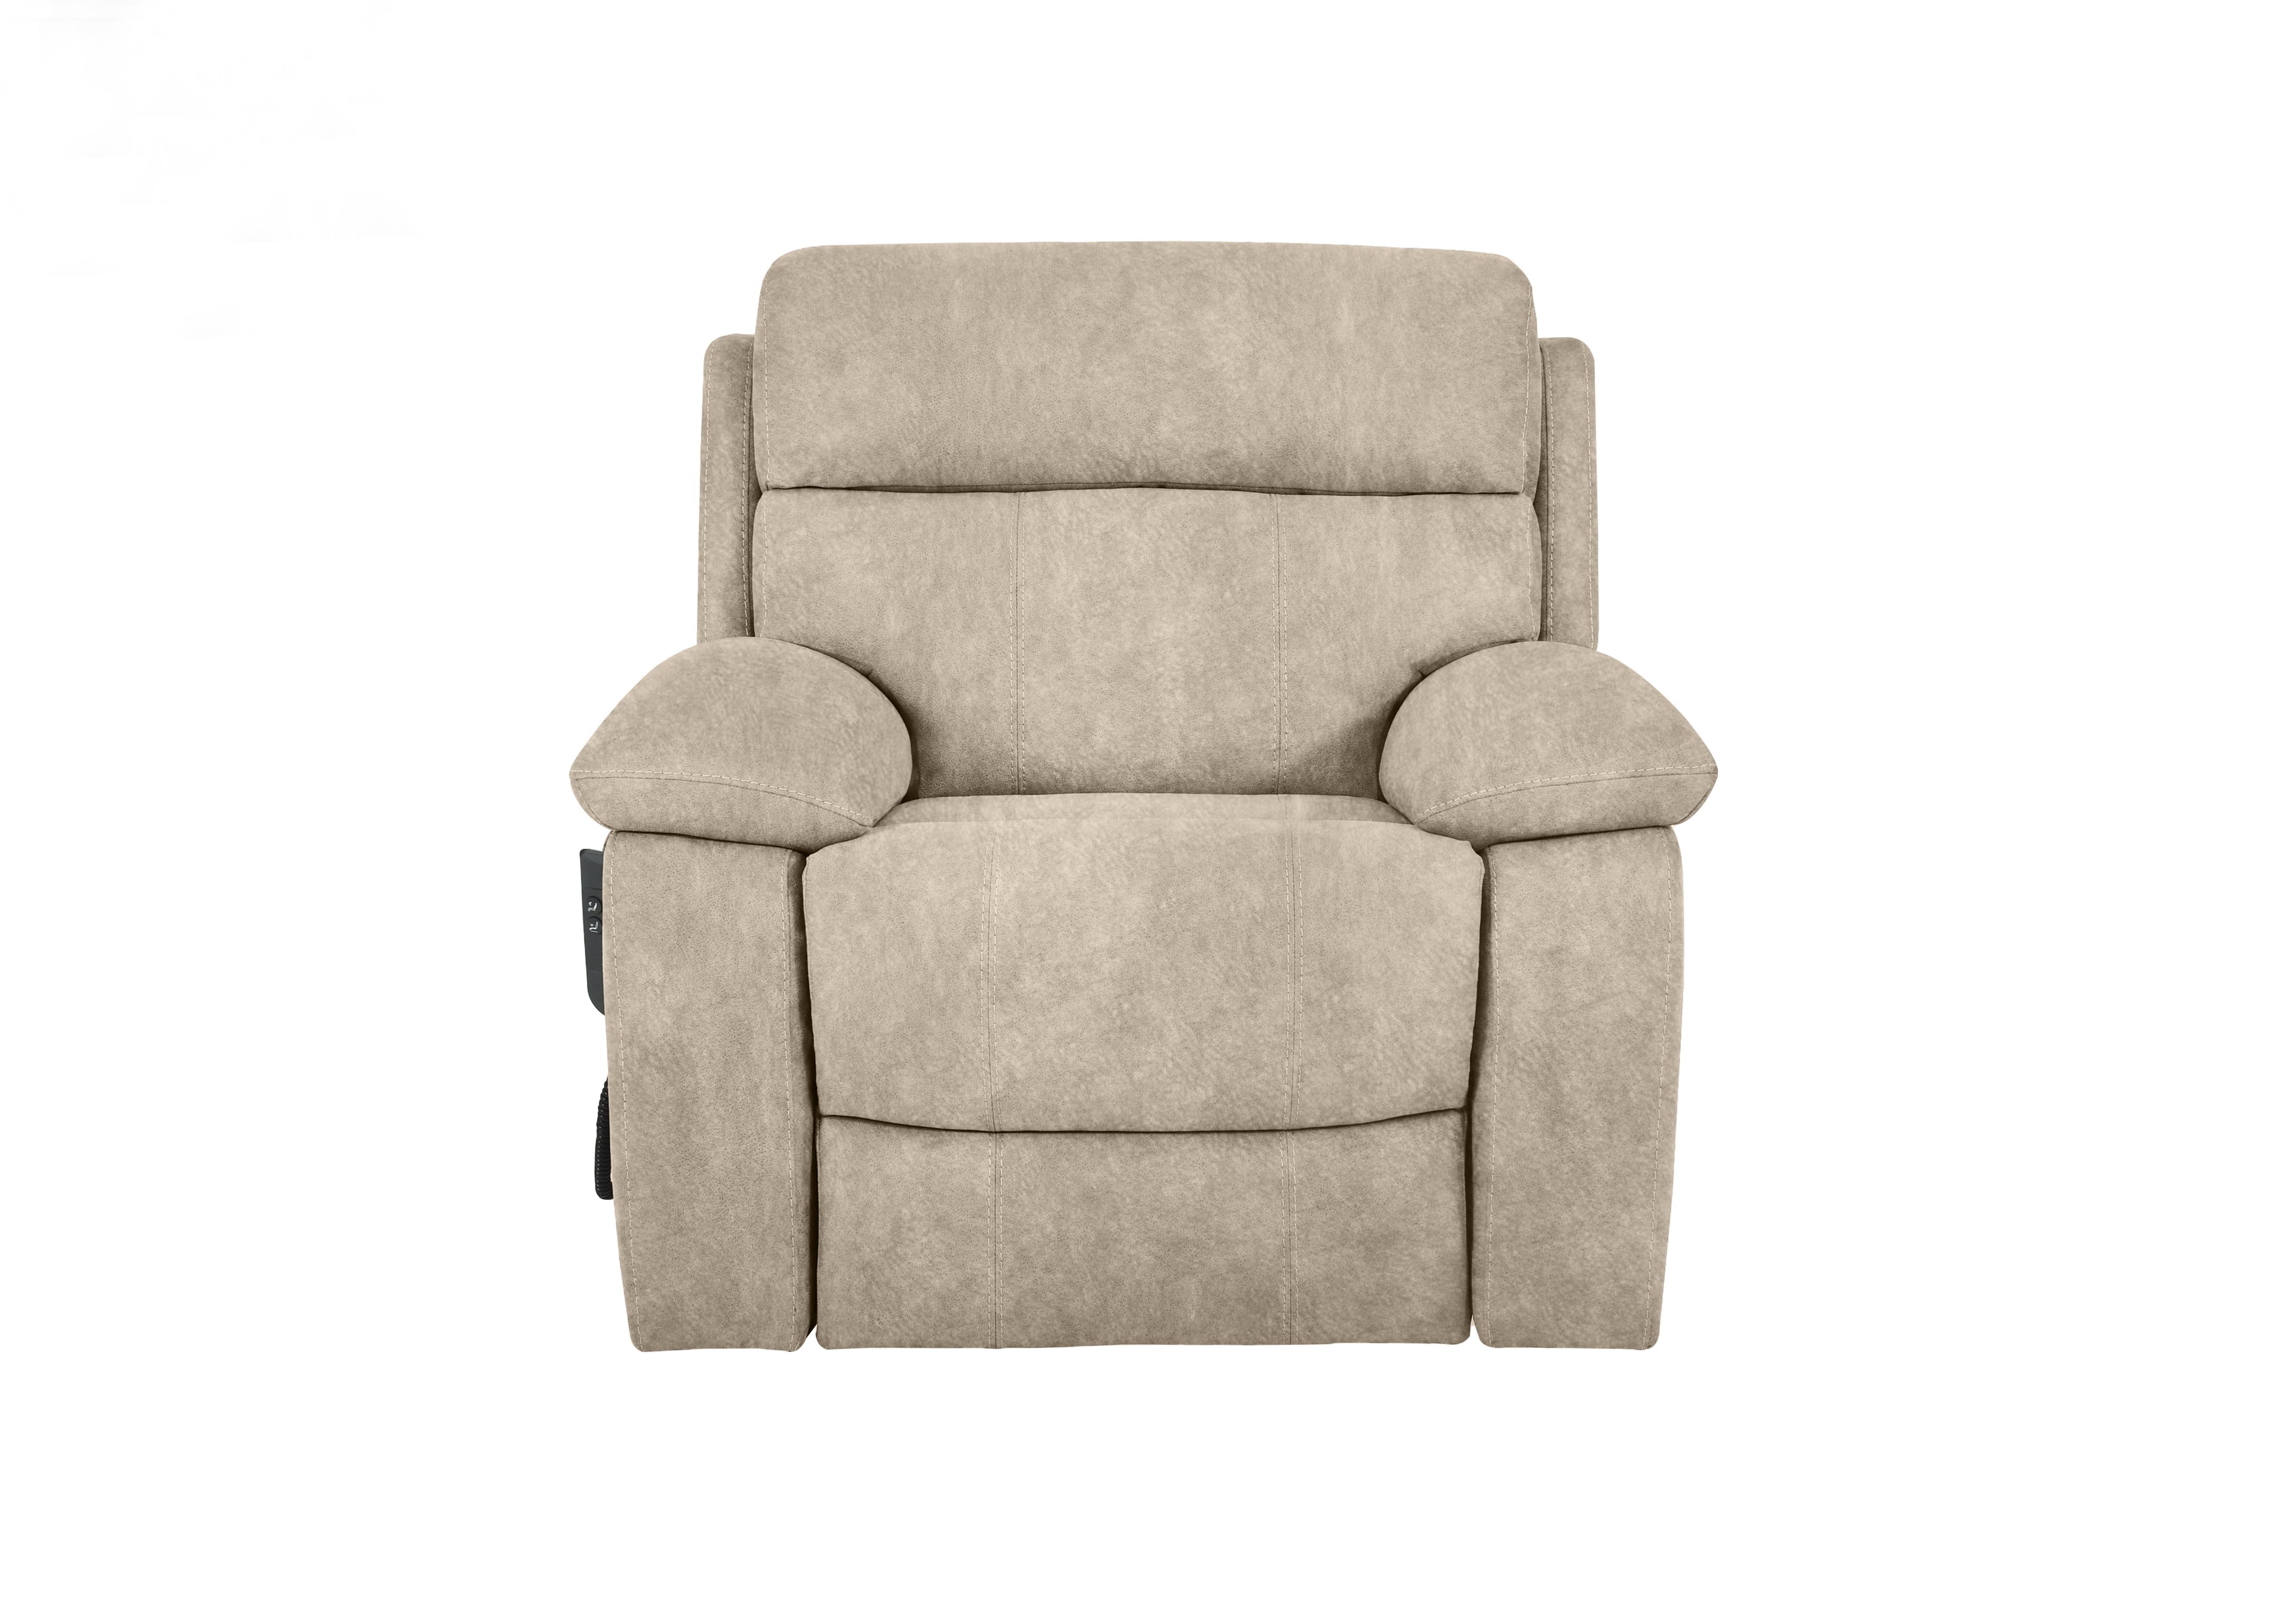 Moreno Fabric Lift and Rise Chair in Bfa-Bnn-R26 Cream on Furniture Village